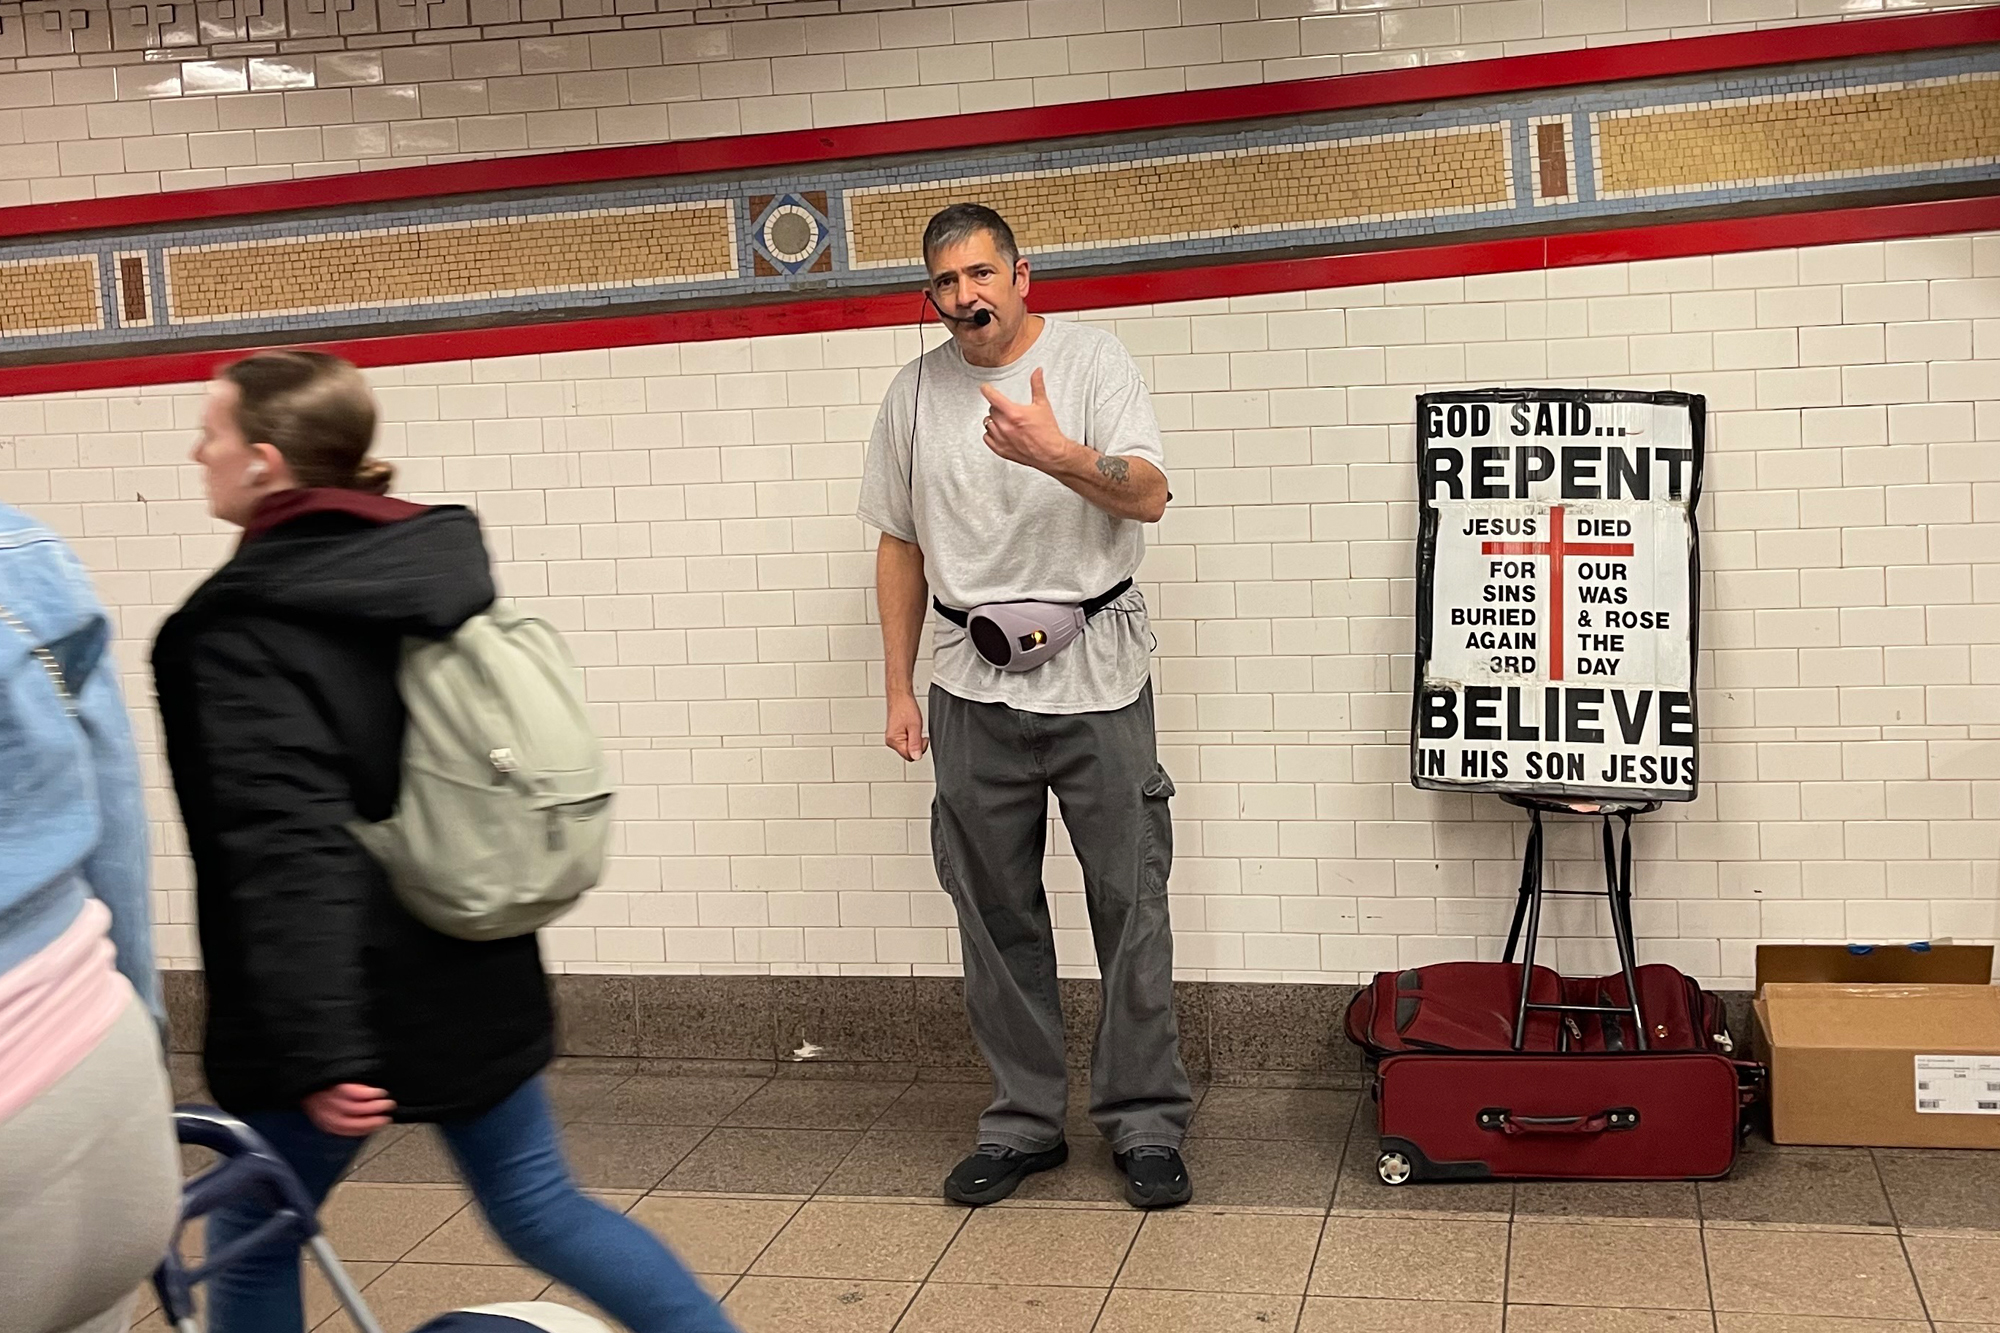 New York City, Subway, God said repent